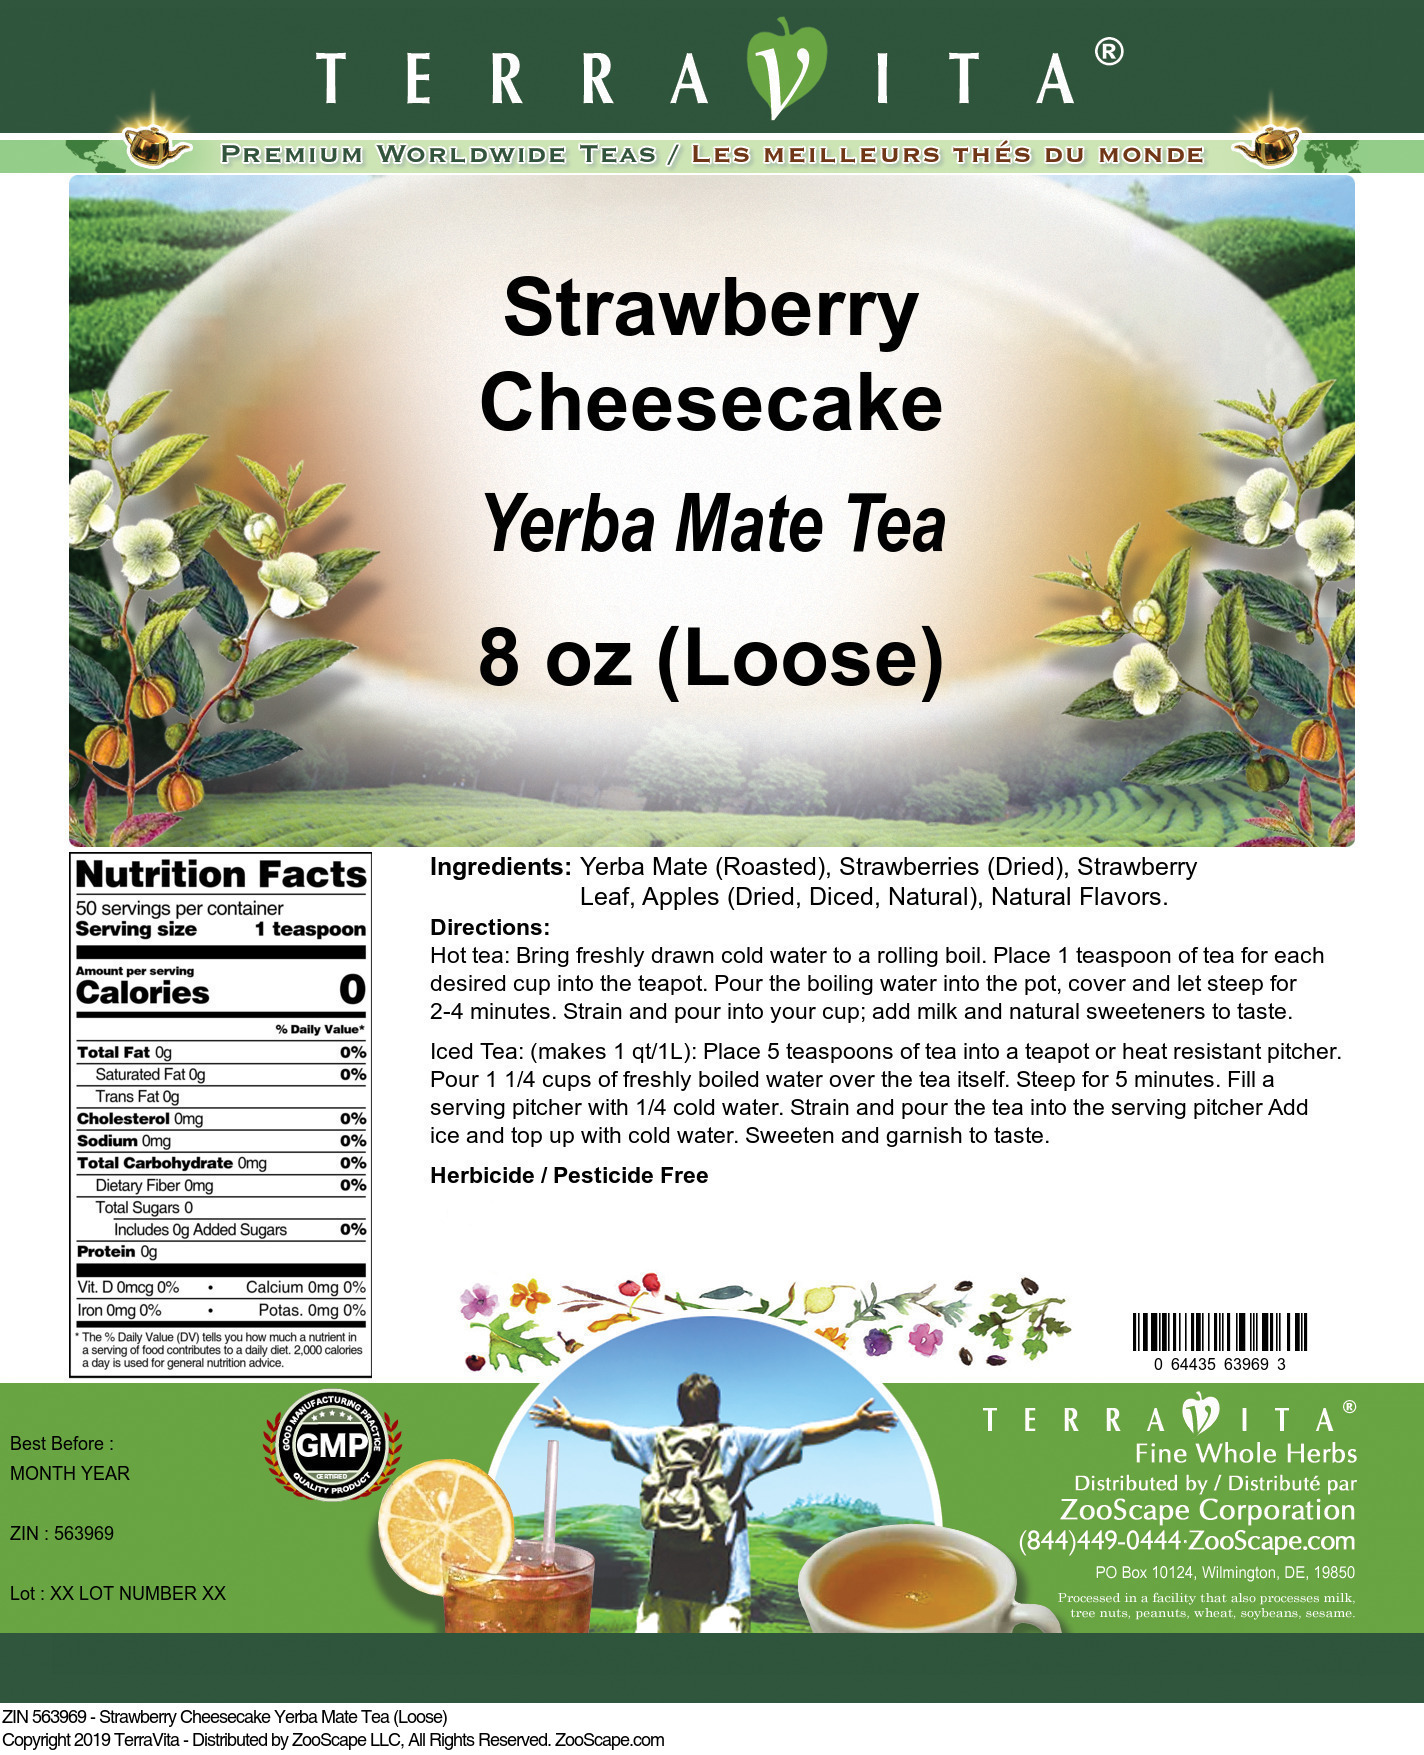 Strawberry Cheesecake Yerba Mate Tea (Loose) - Label